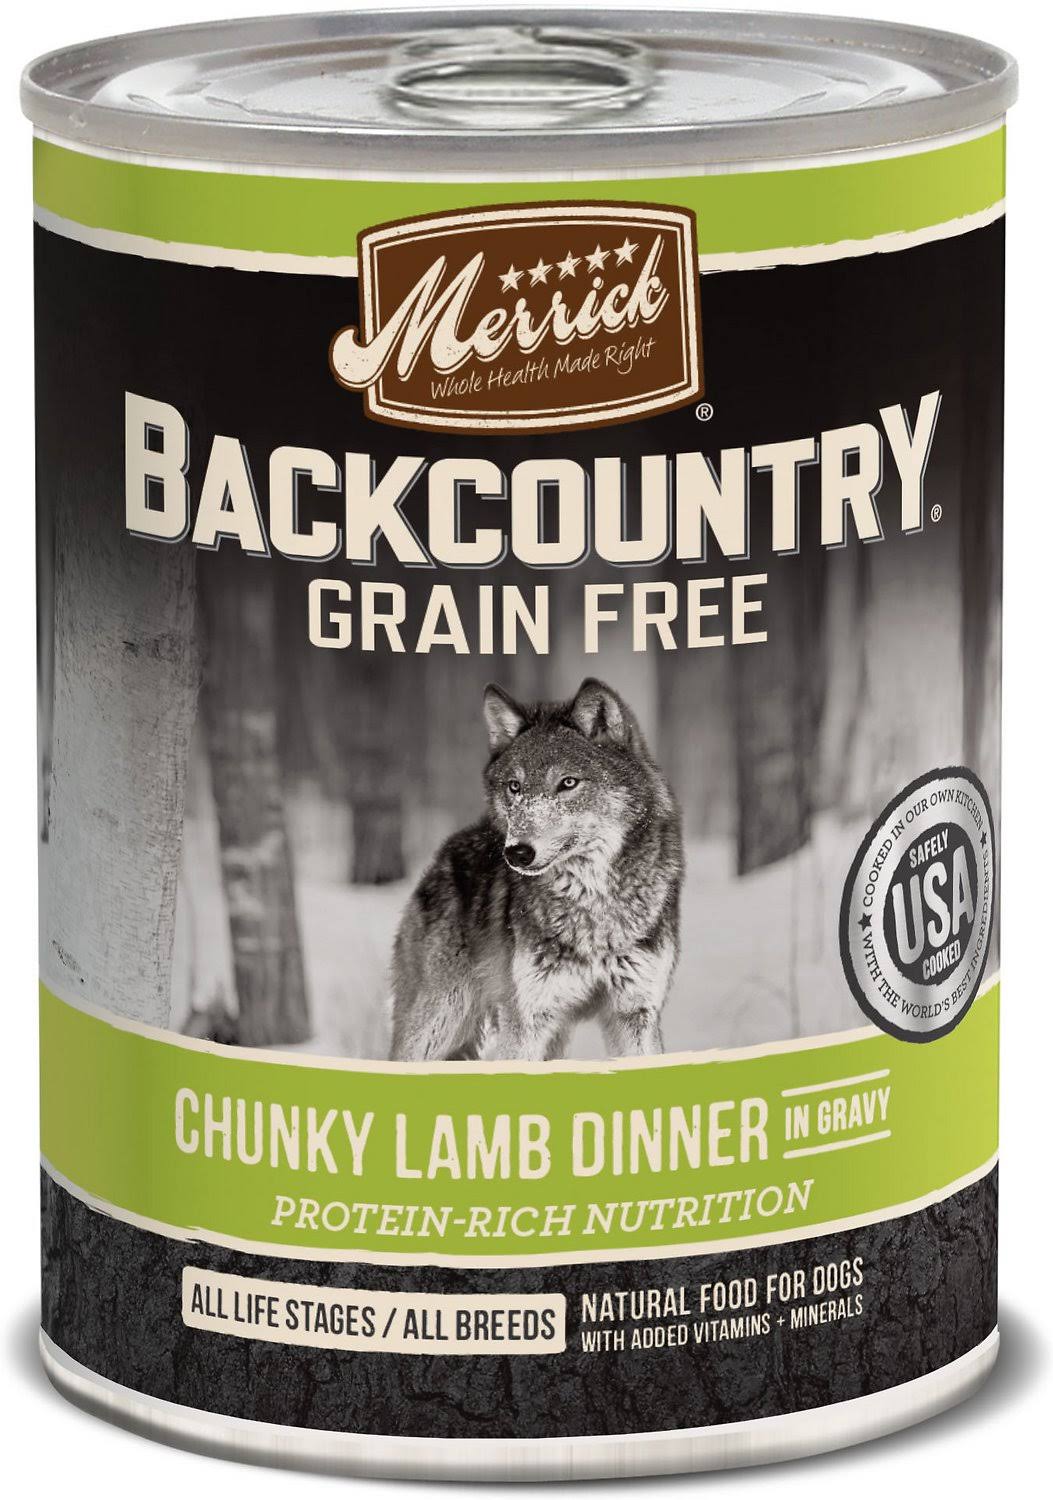 Merrick Backcountry Grain Free Dog Foof - Chunky Lamb Dinner